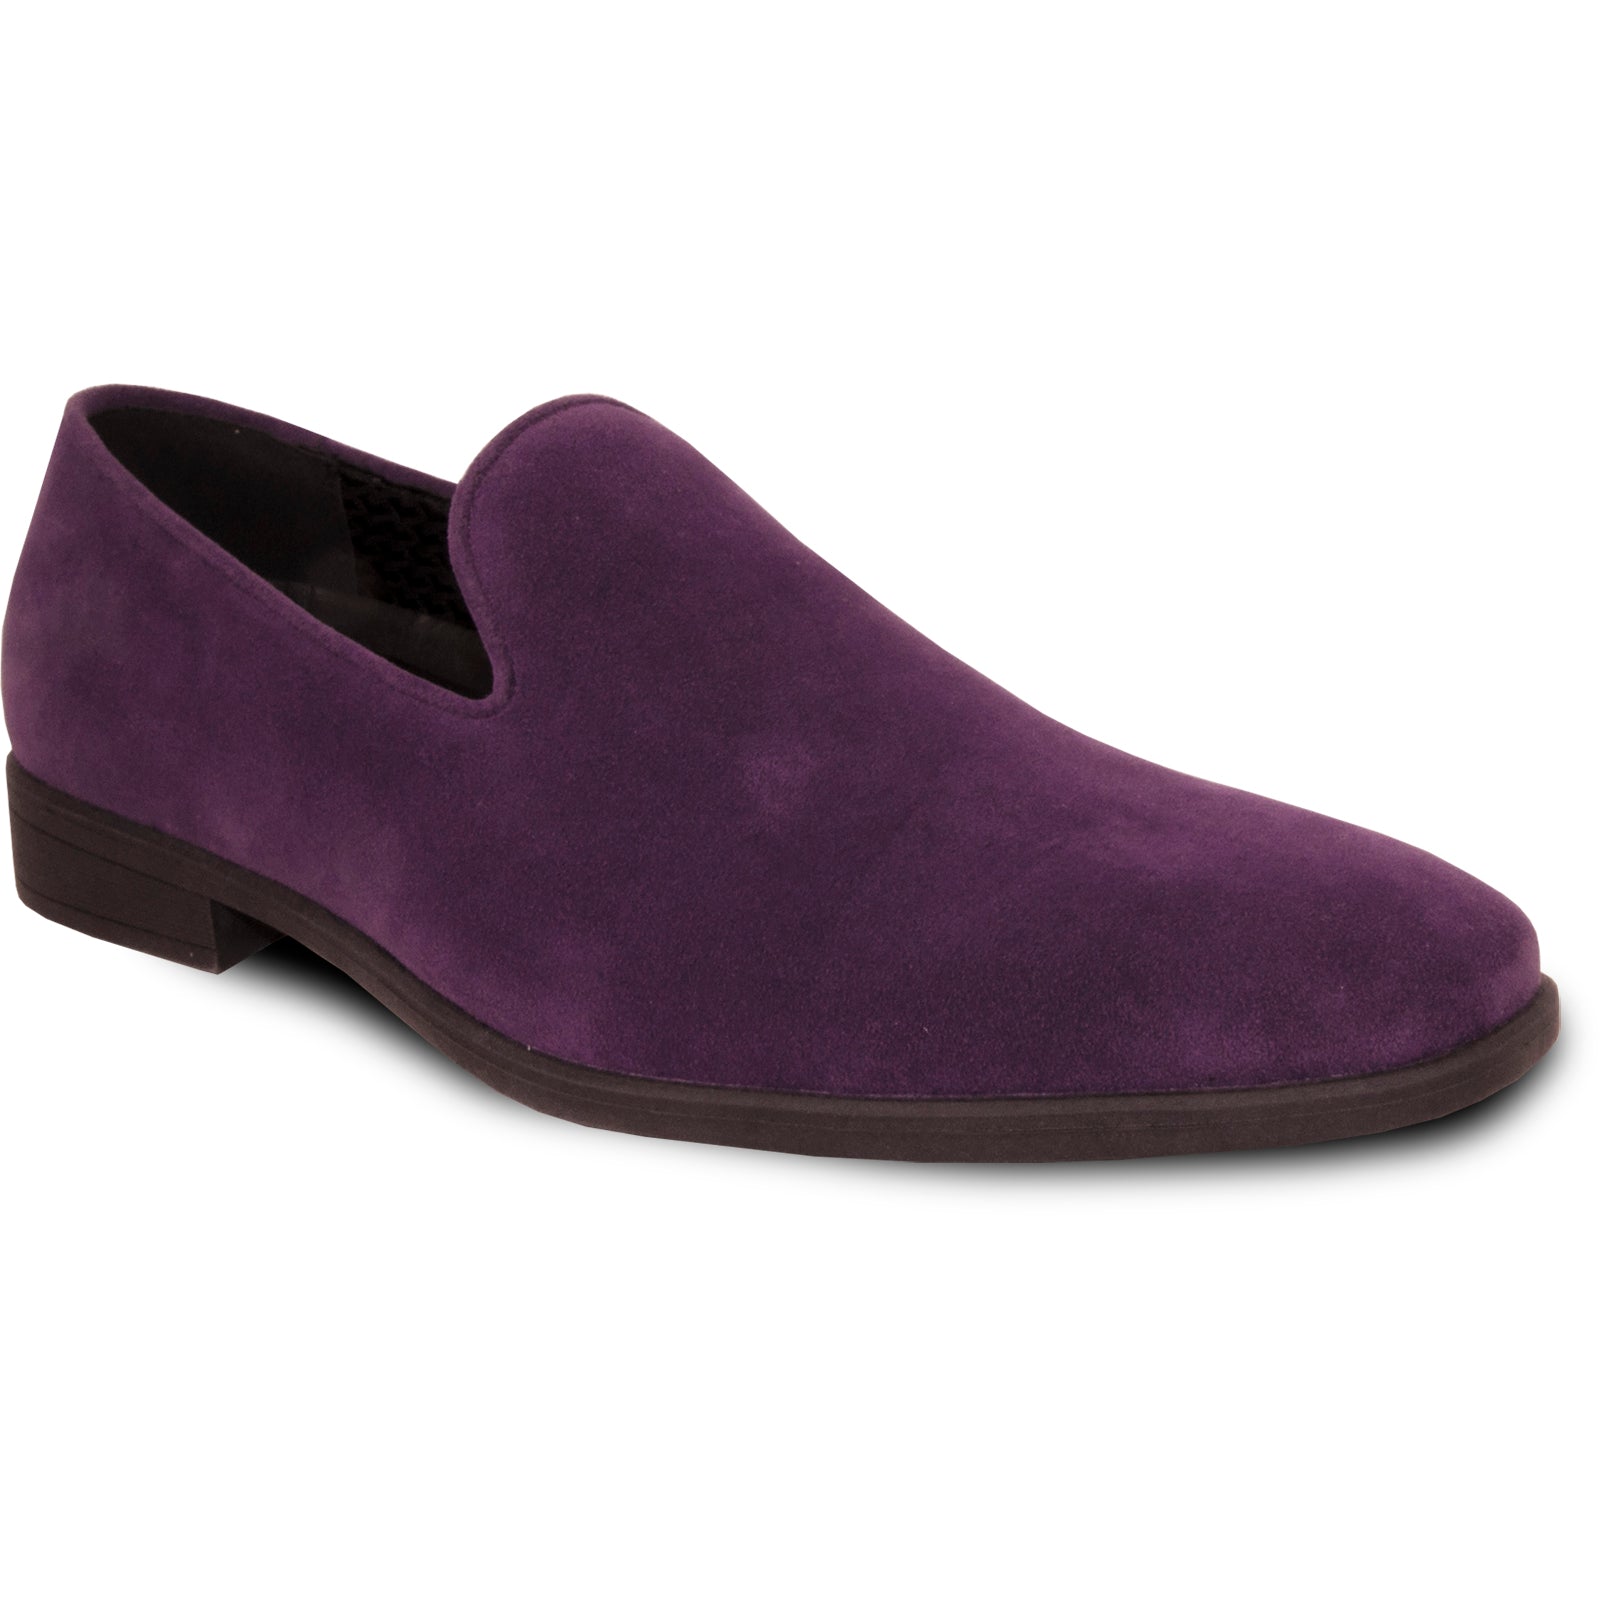 "Vegan Suede Men's Loafer - Purple Dress Shoe for Wedding & Prom"